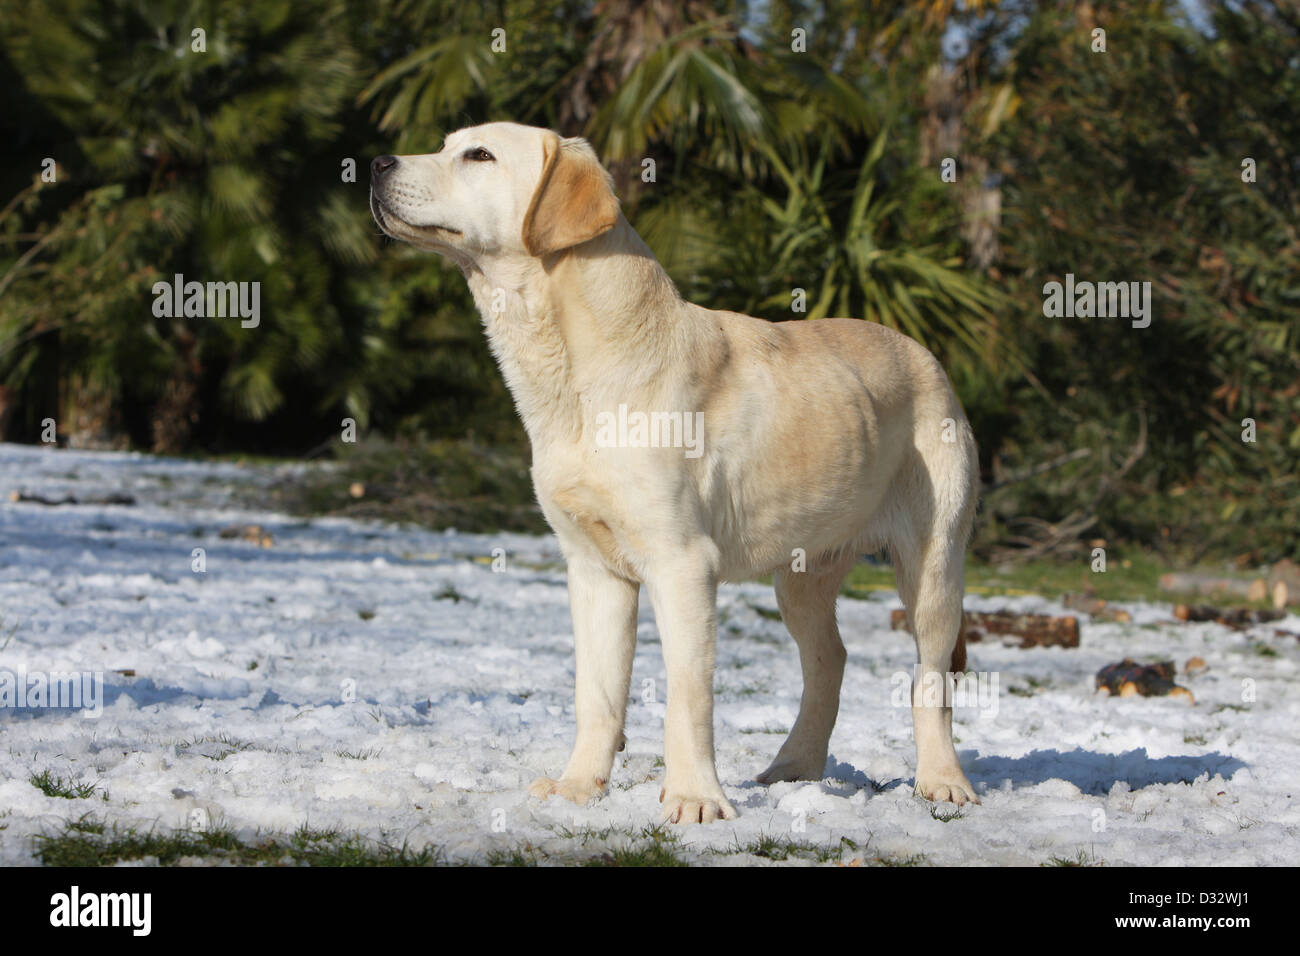 Dog Labrador Retriever  adult standing in snow Stock Photo